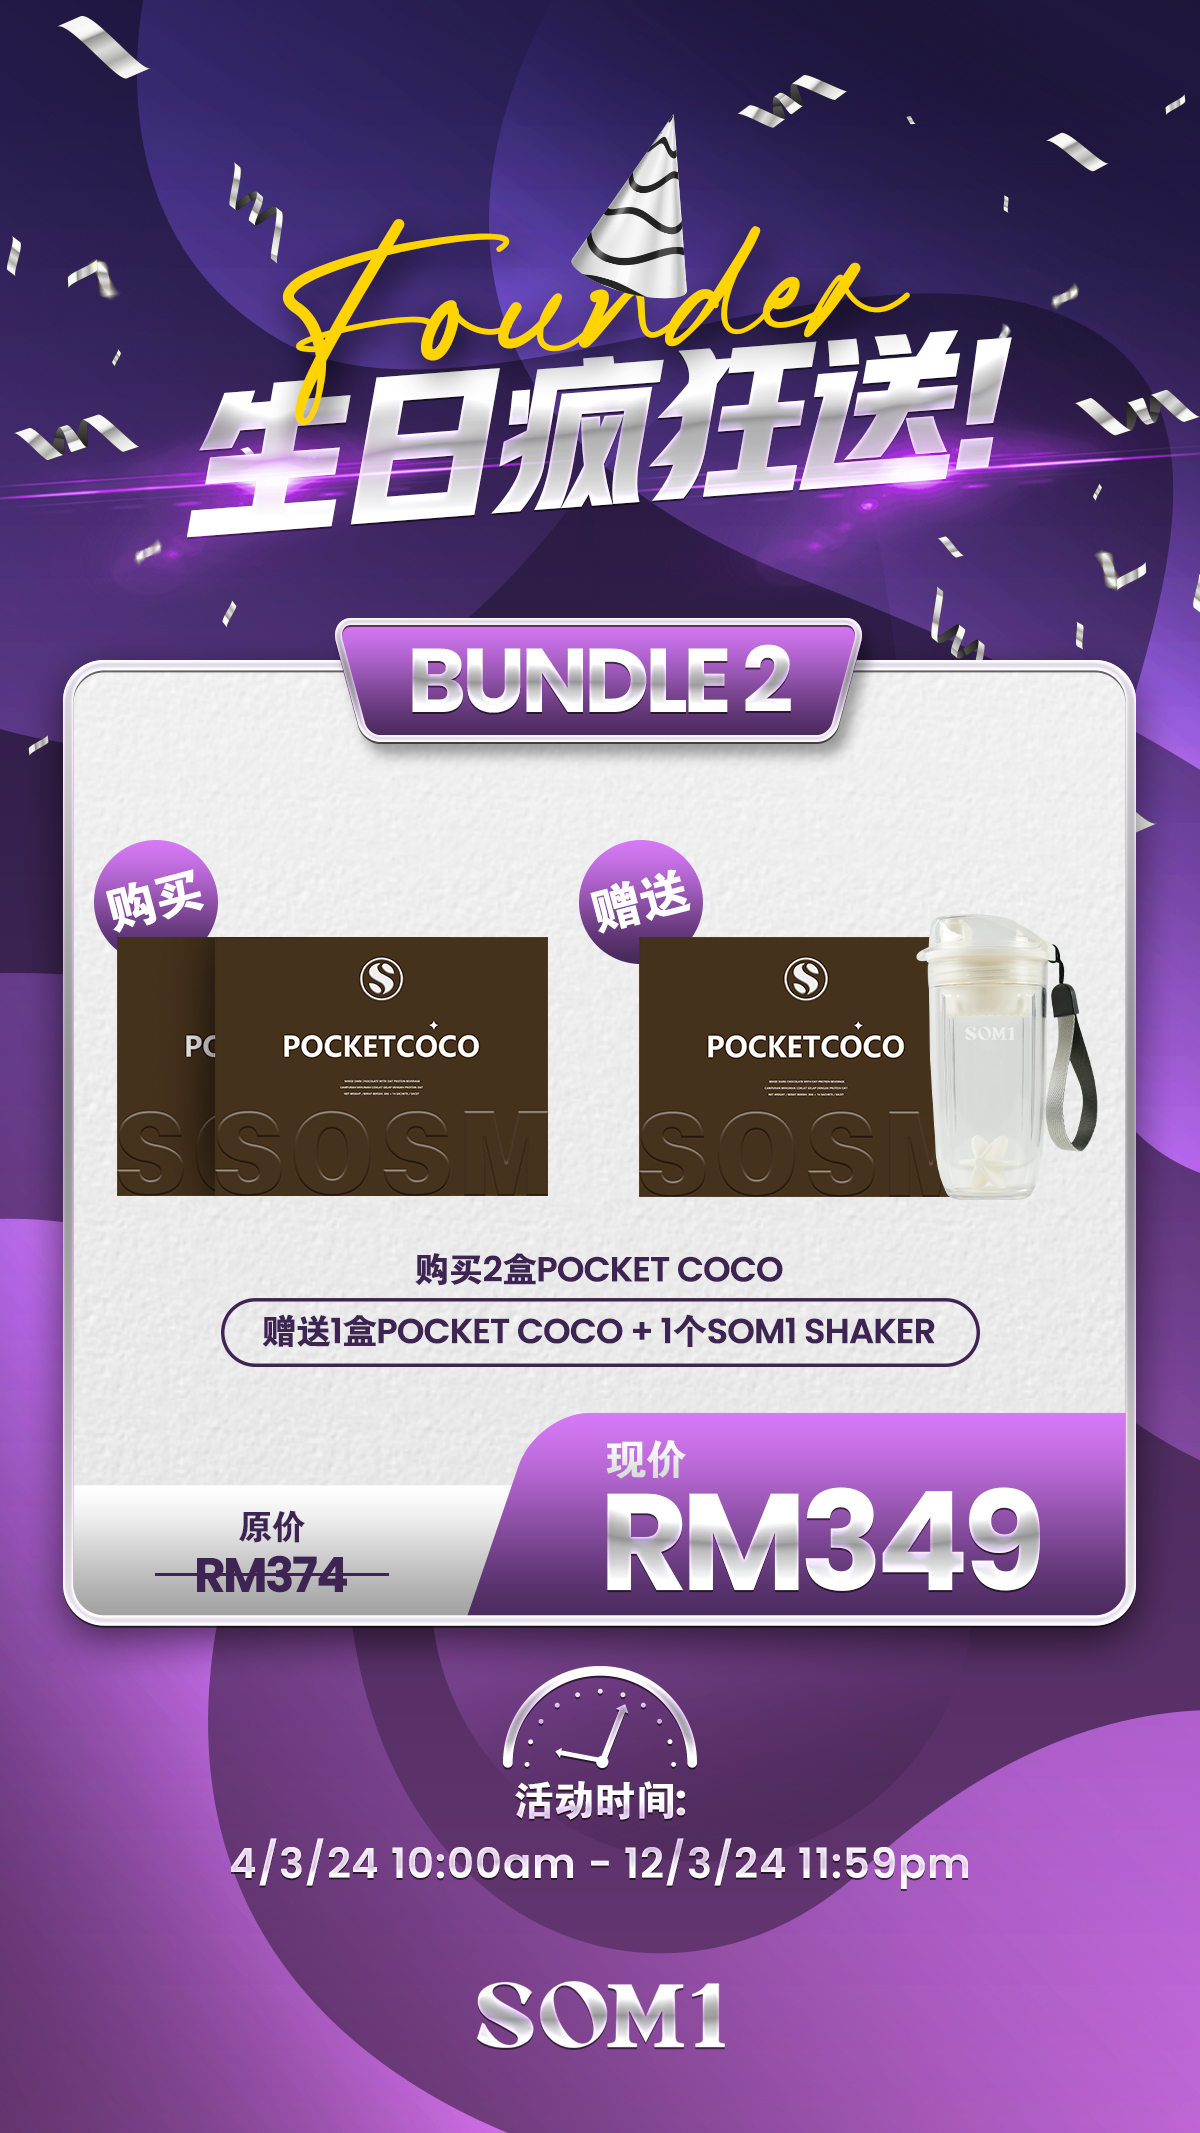 Bundle 2 Malaysia 中文-1709511599444